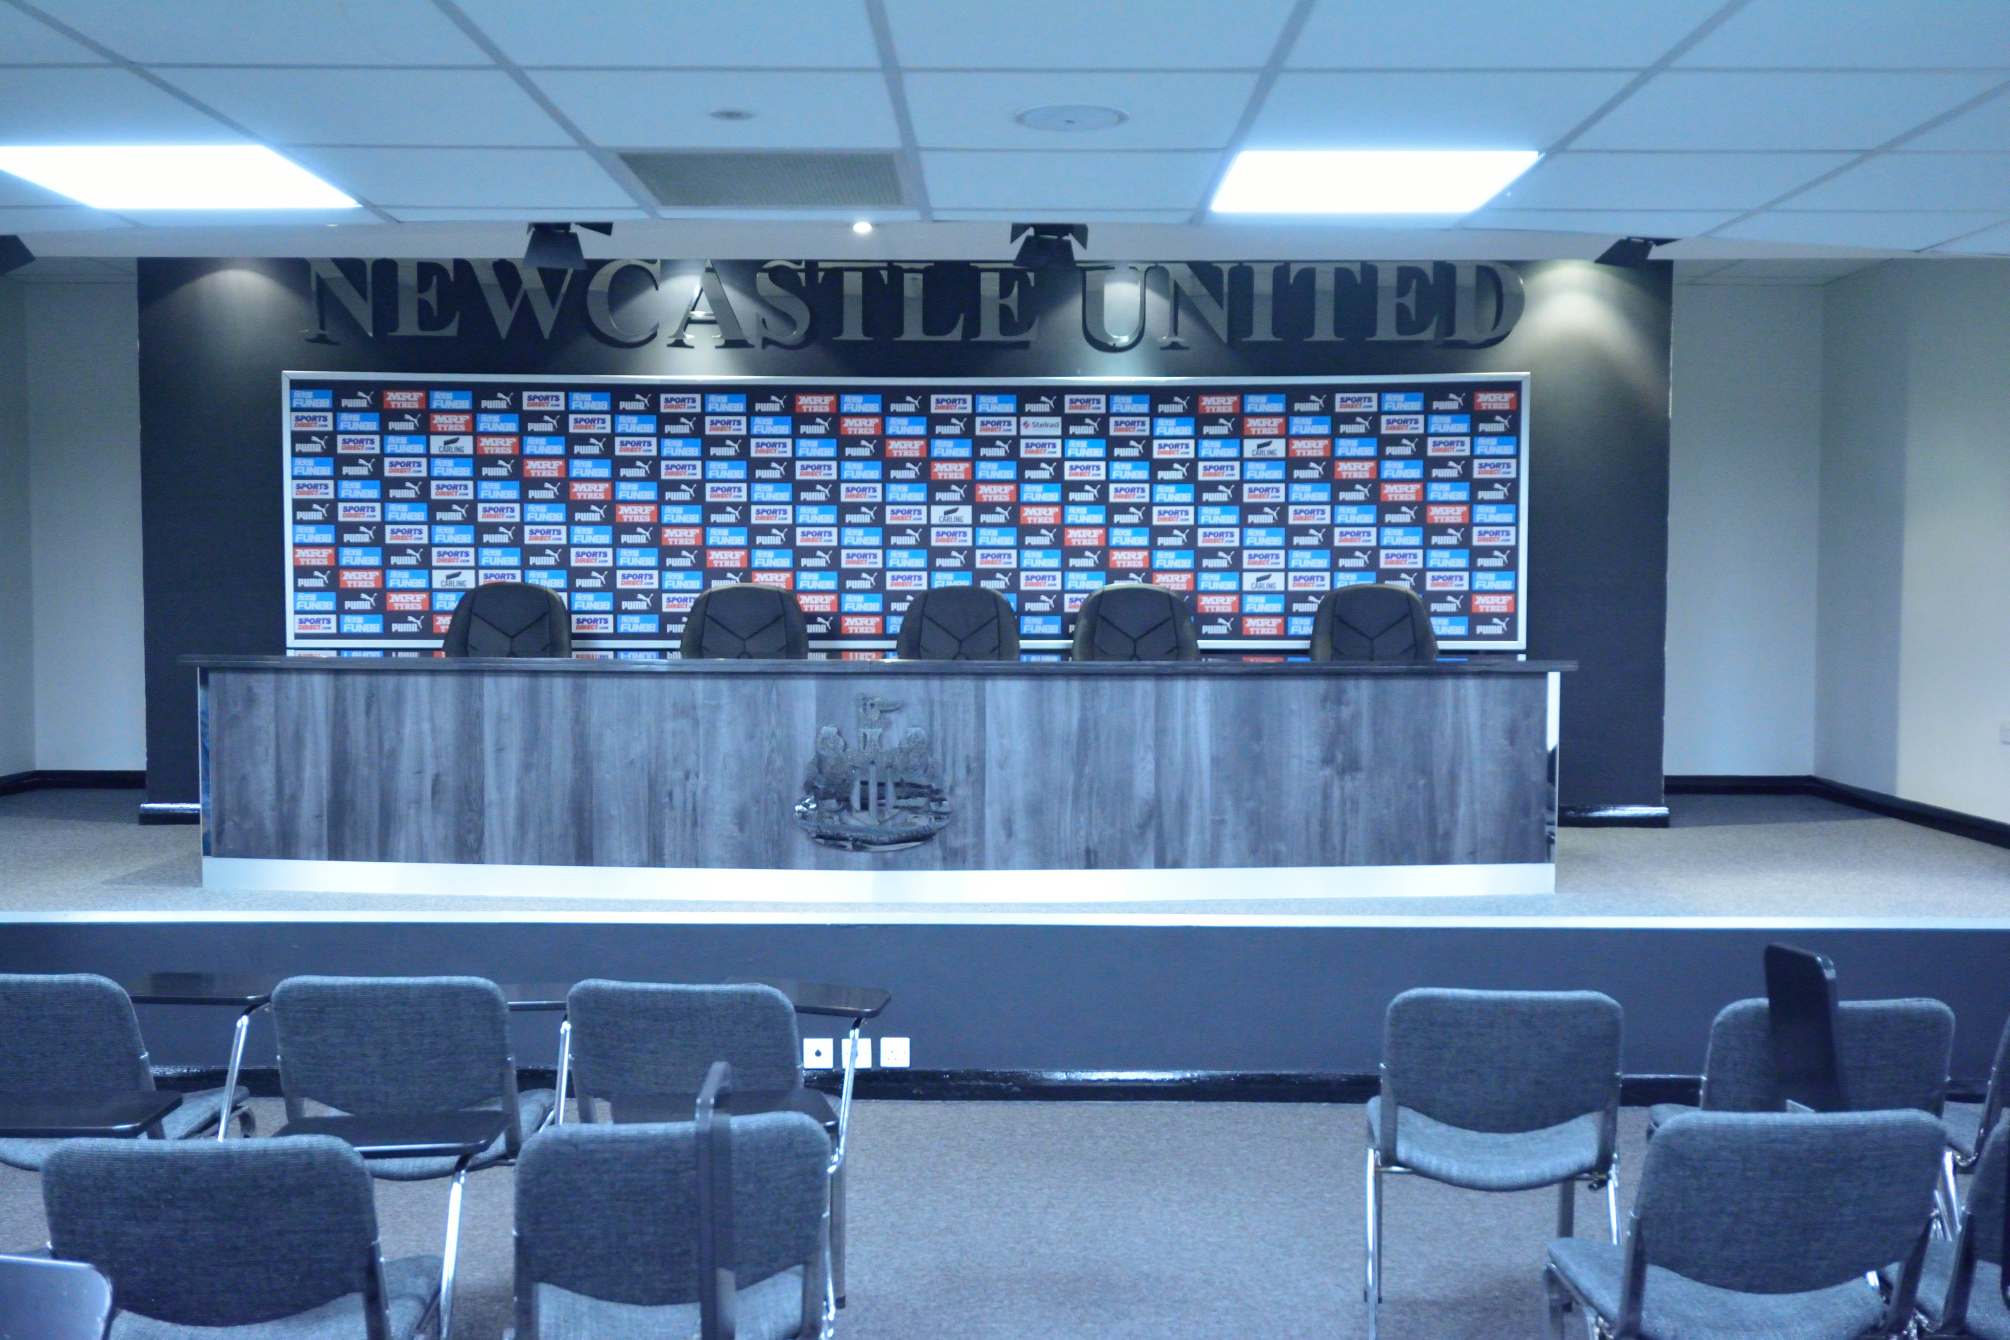 nufc tours13 Newcastle United Stadium Tours for Fans